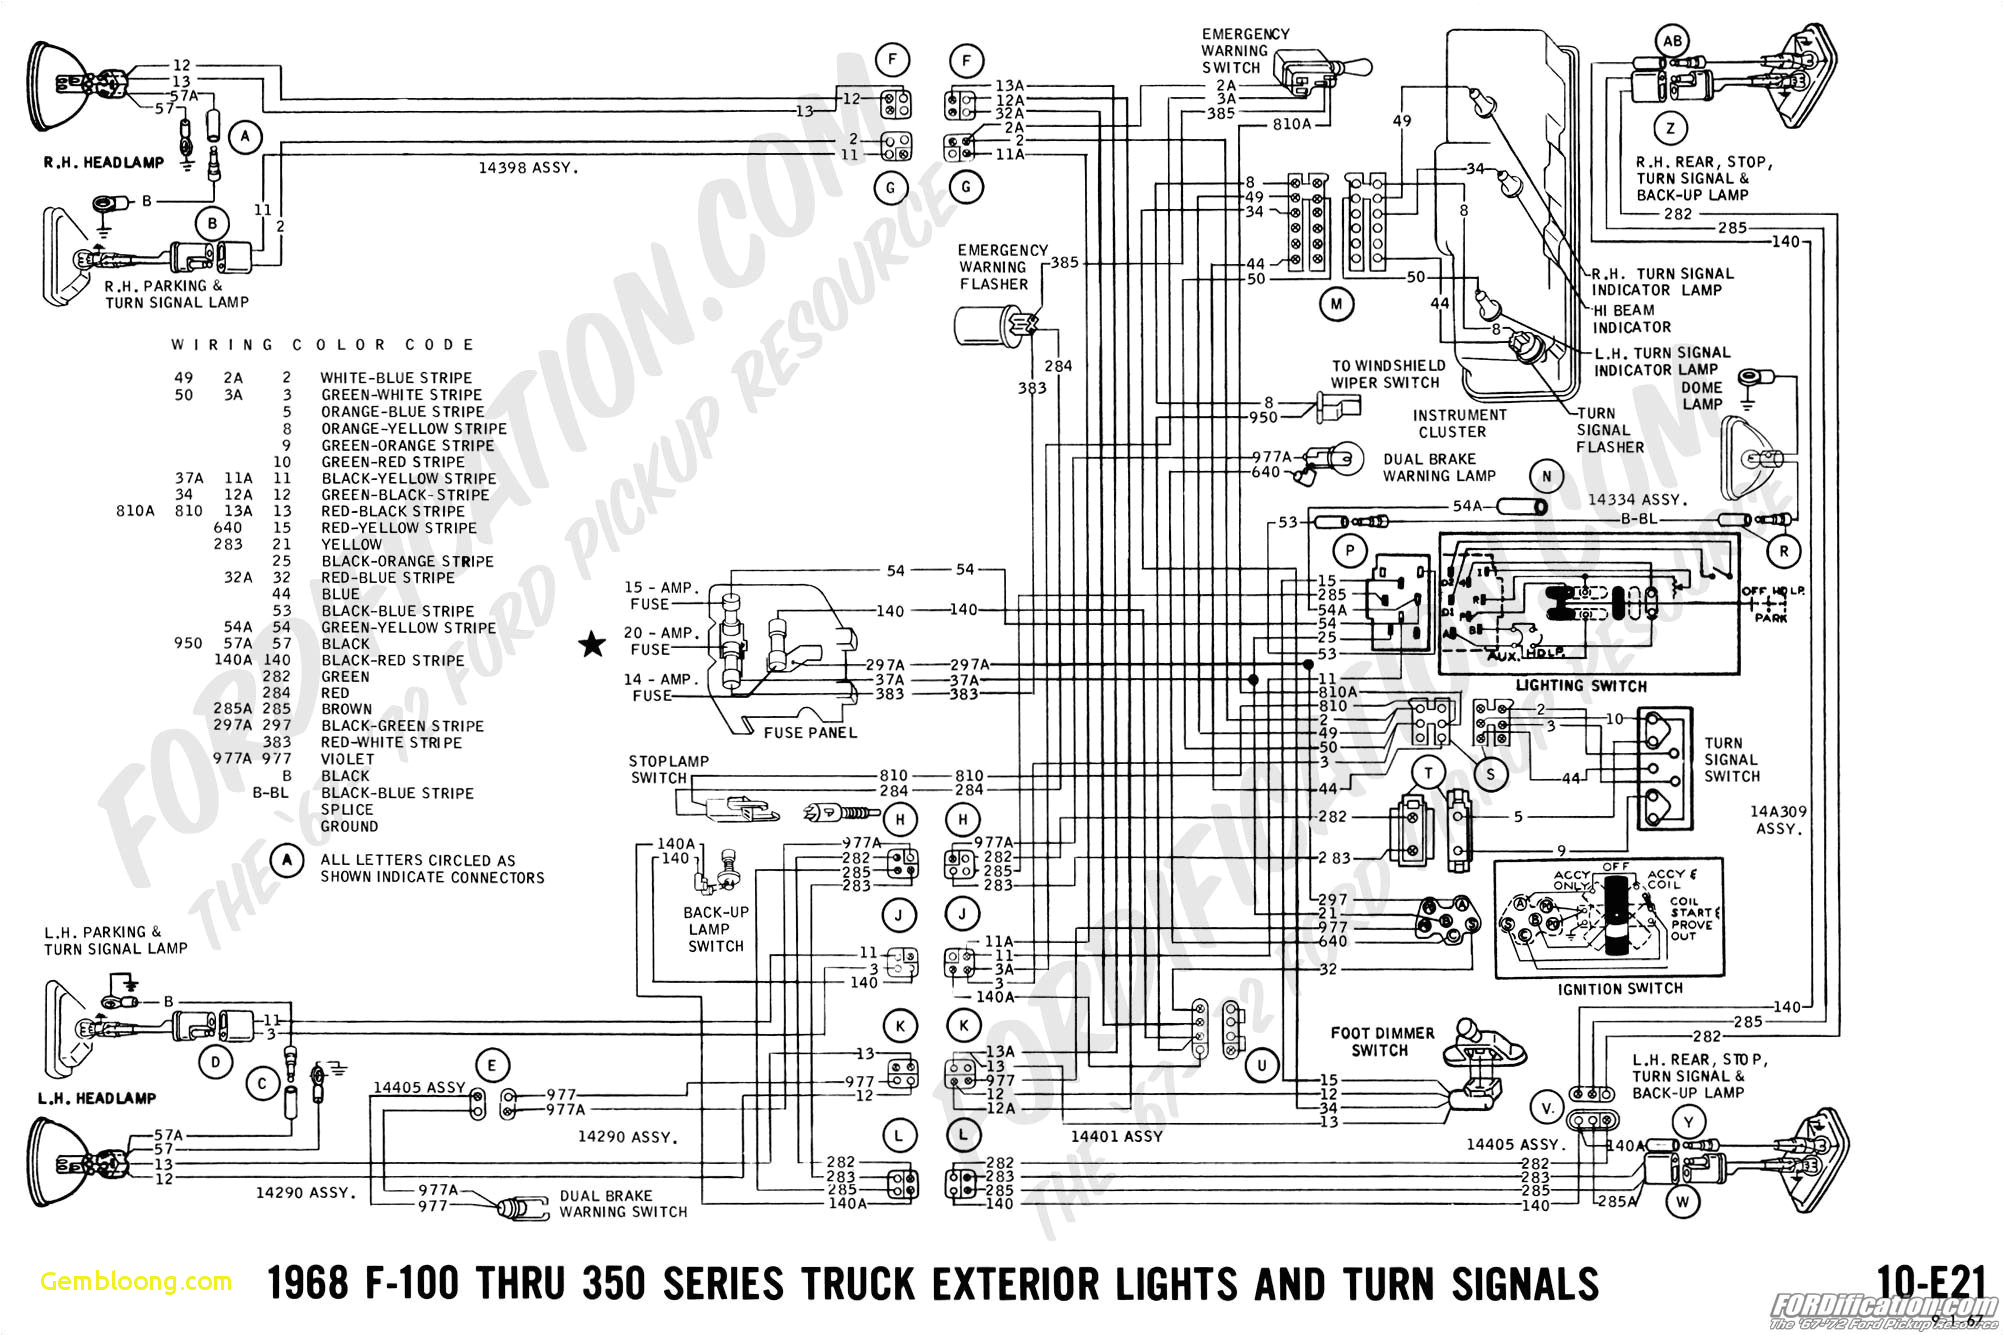 ford diagrams schematics wiring diagram blog wiring diagram for 1996 ford f 150 on ford 4000 tractor ignition